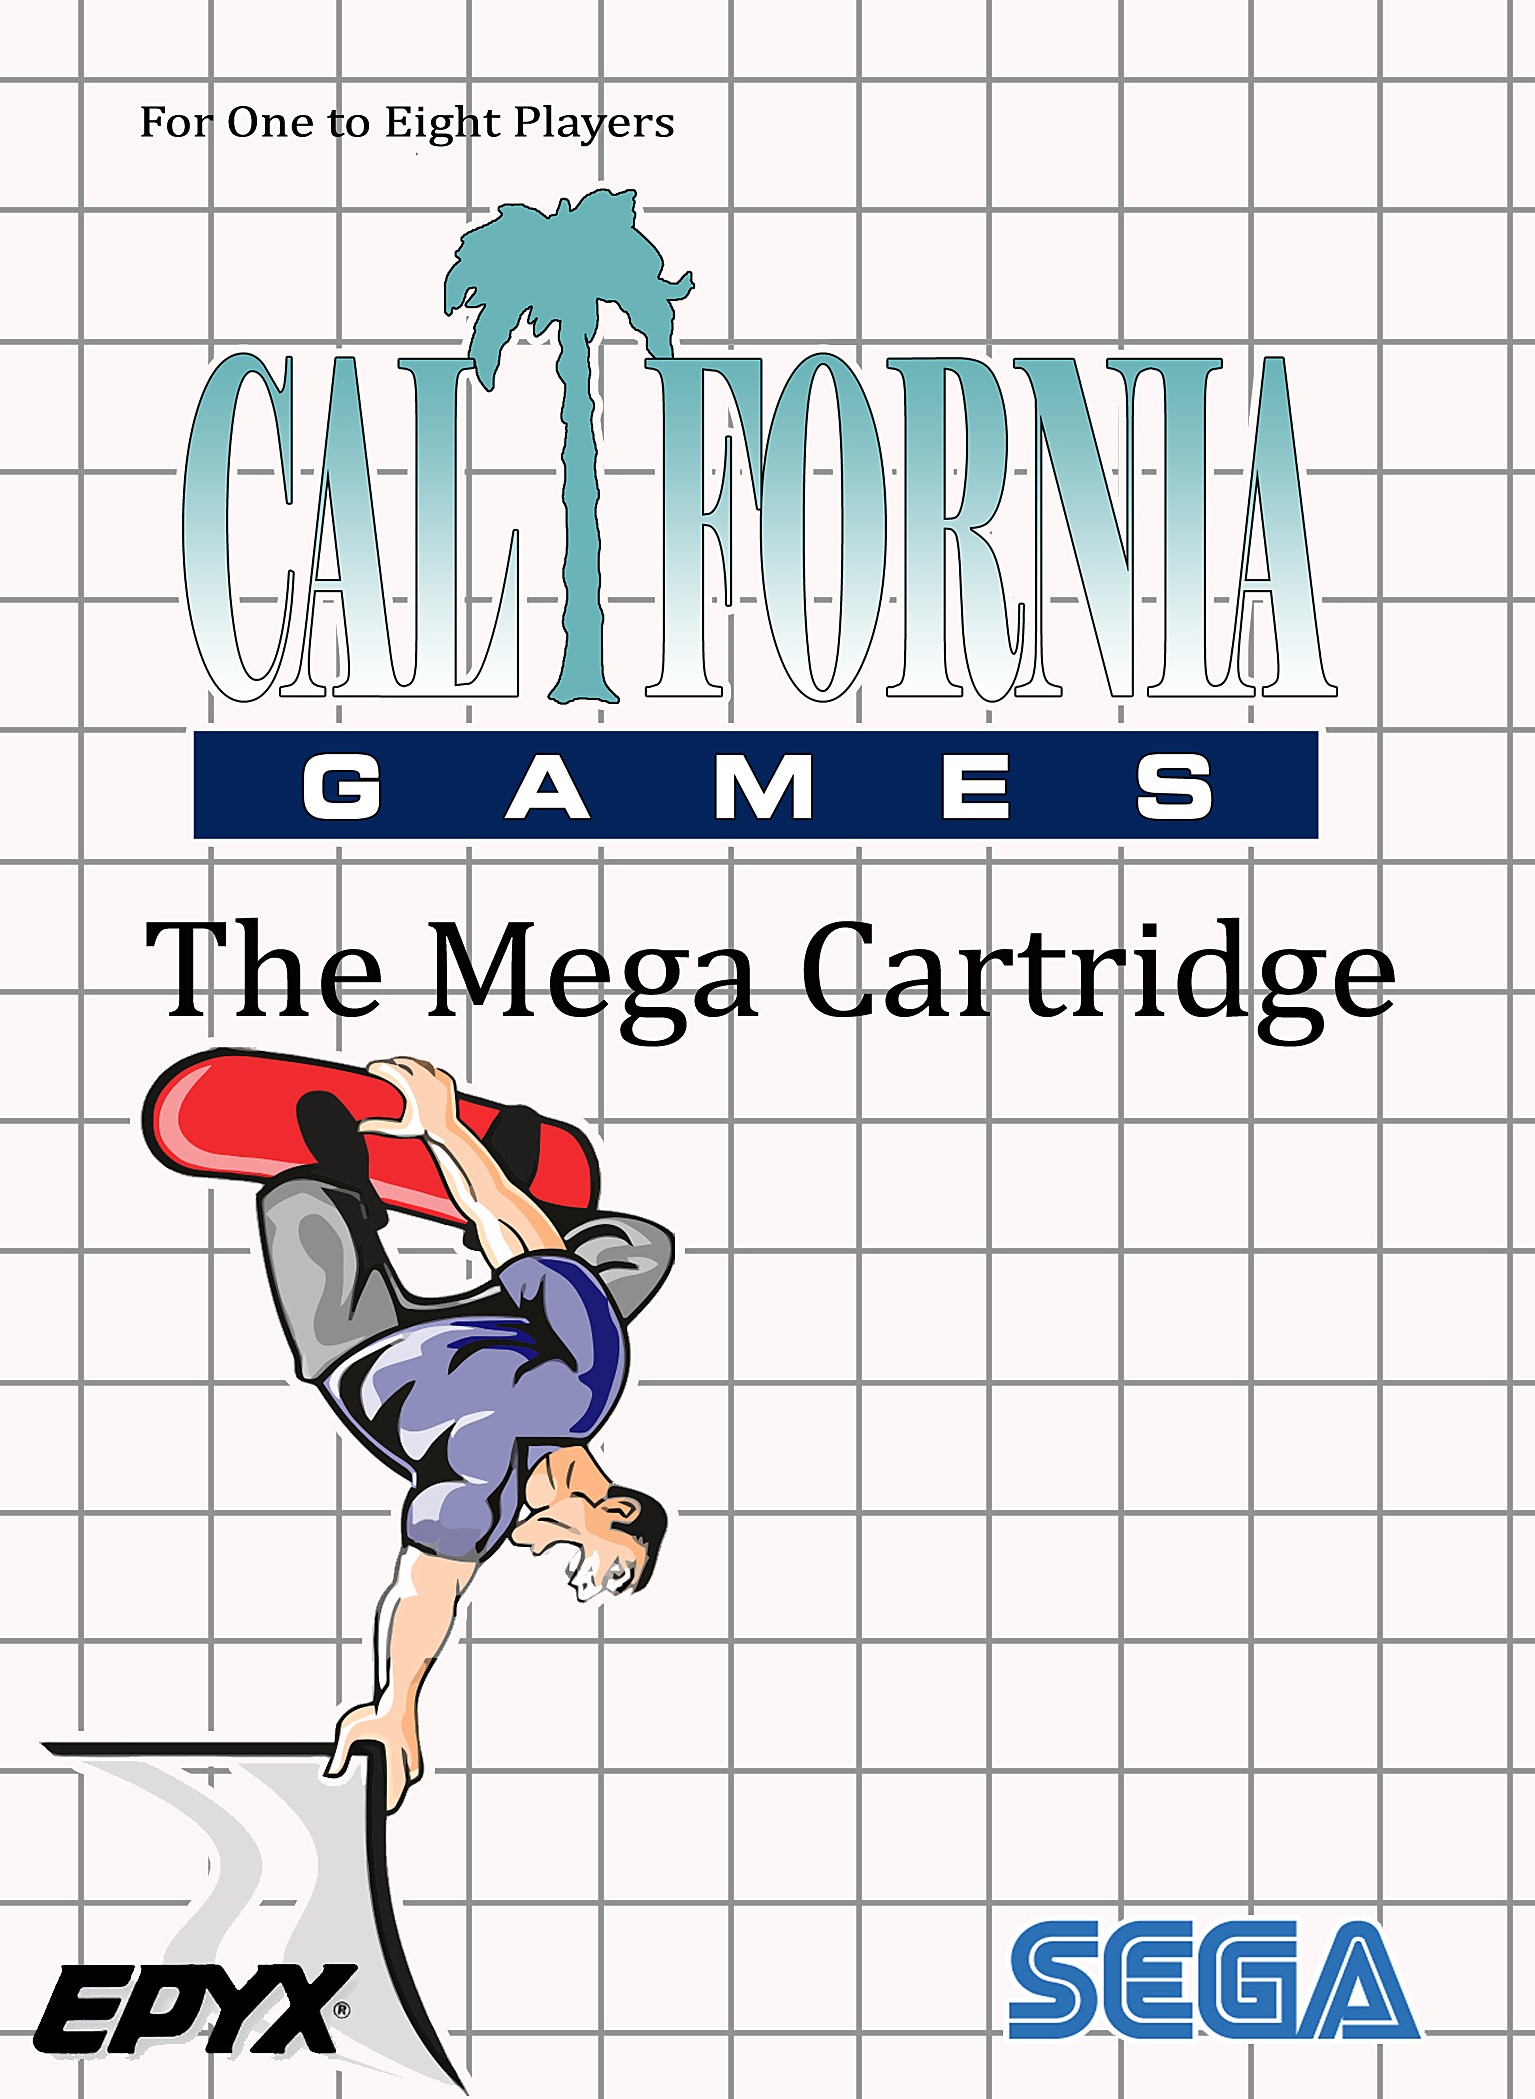 'California Games'